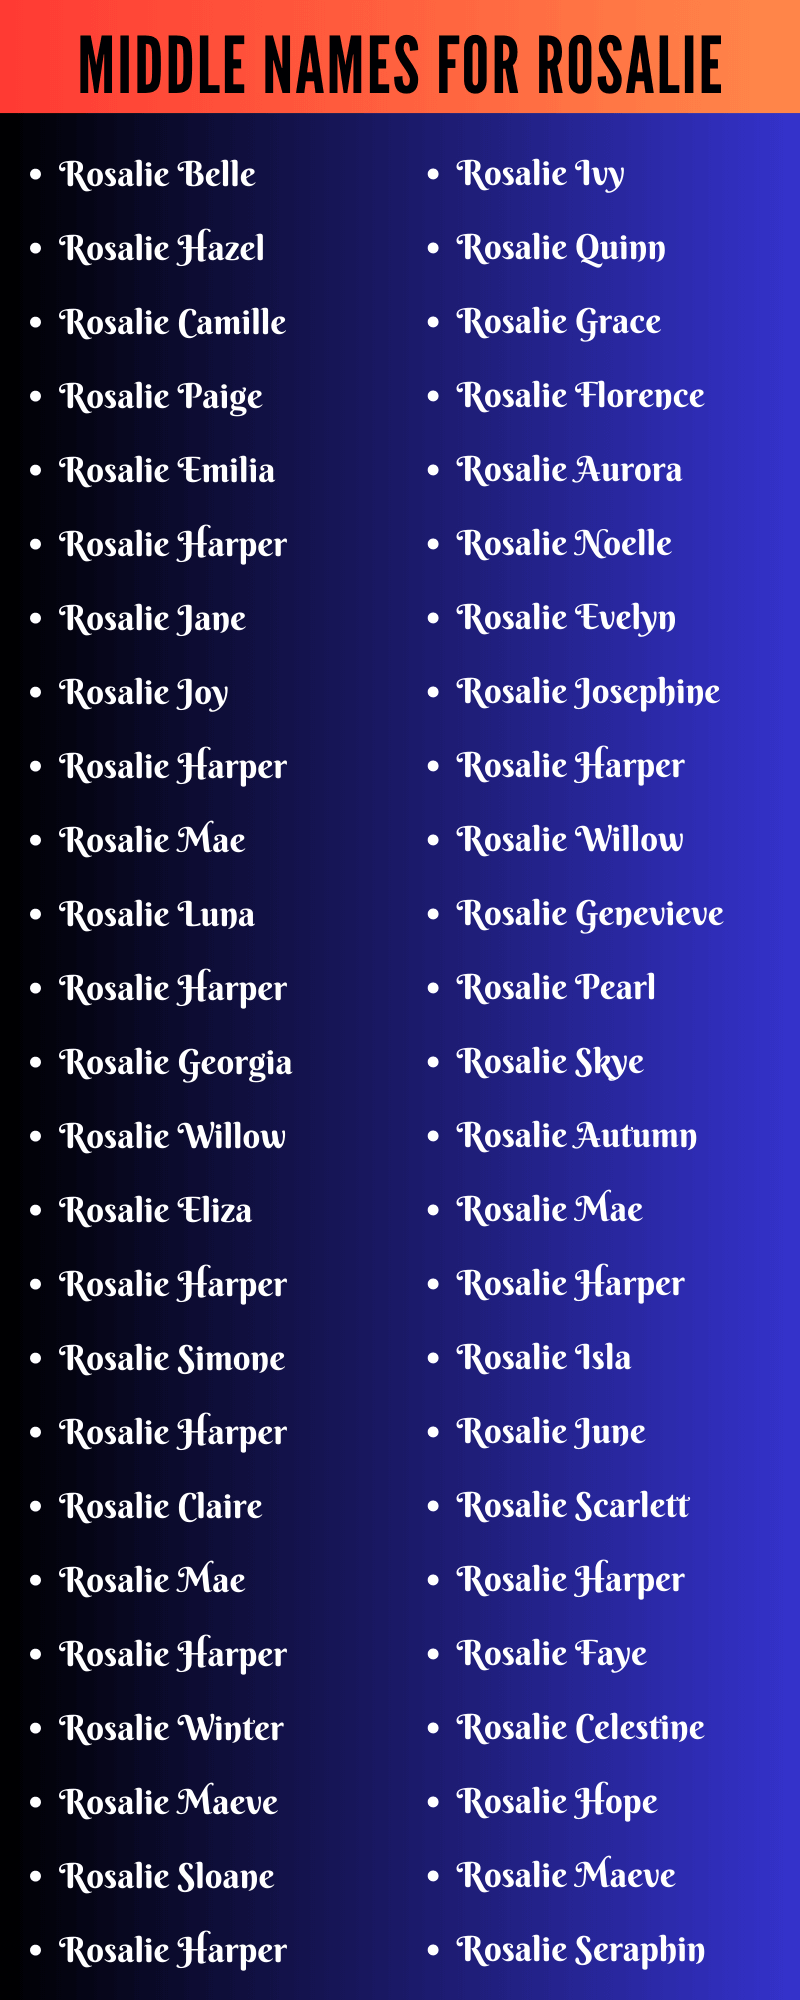 Middle Names For Rosalie